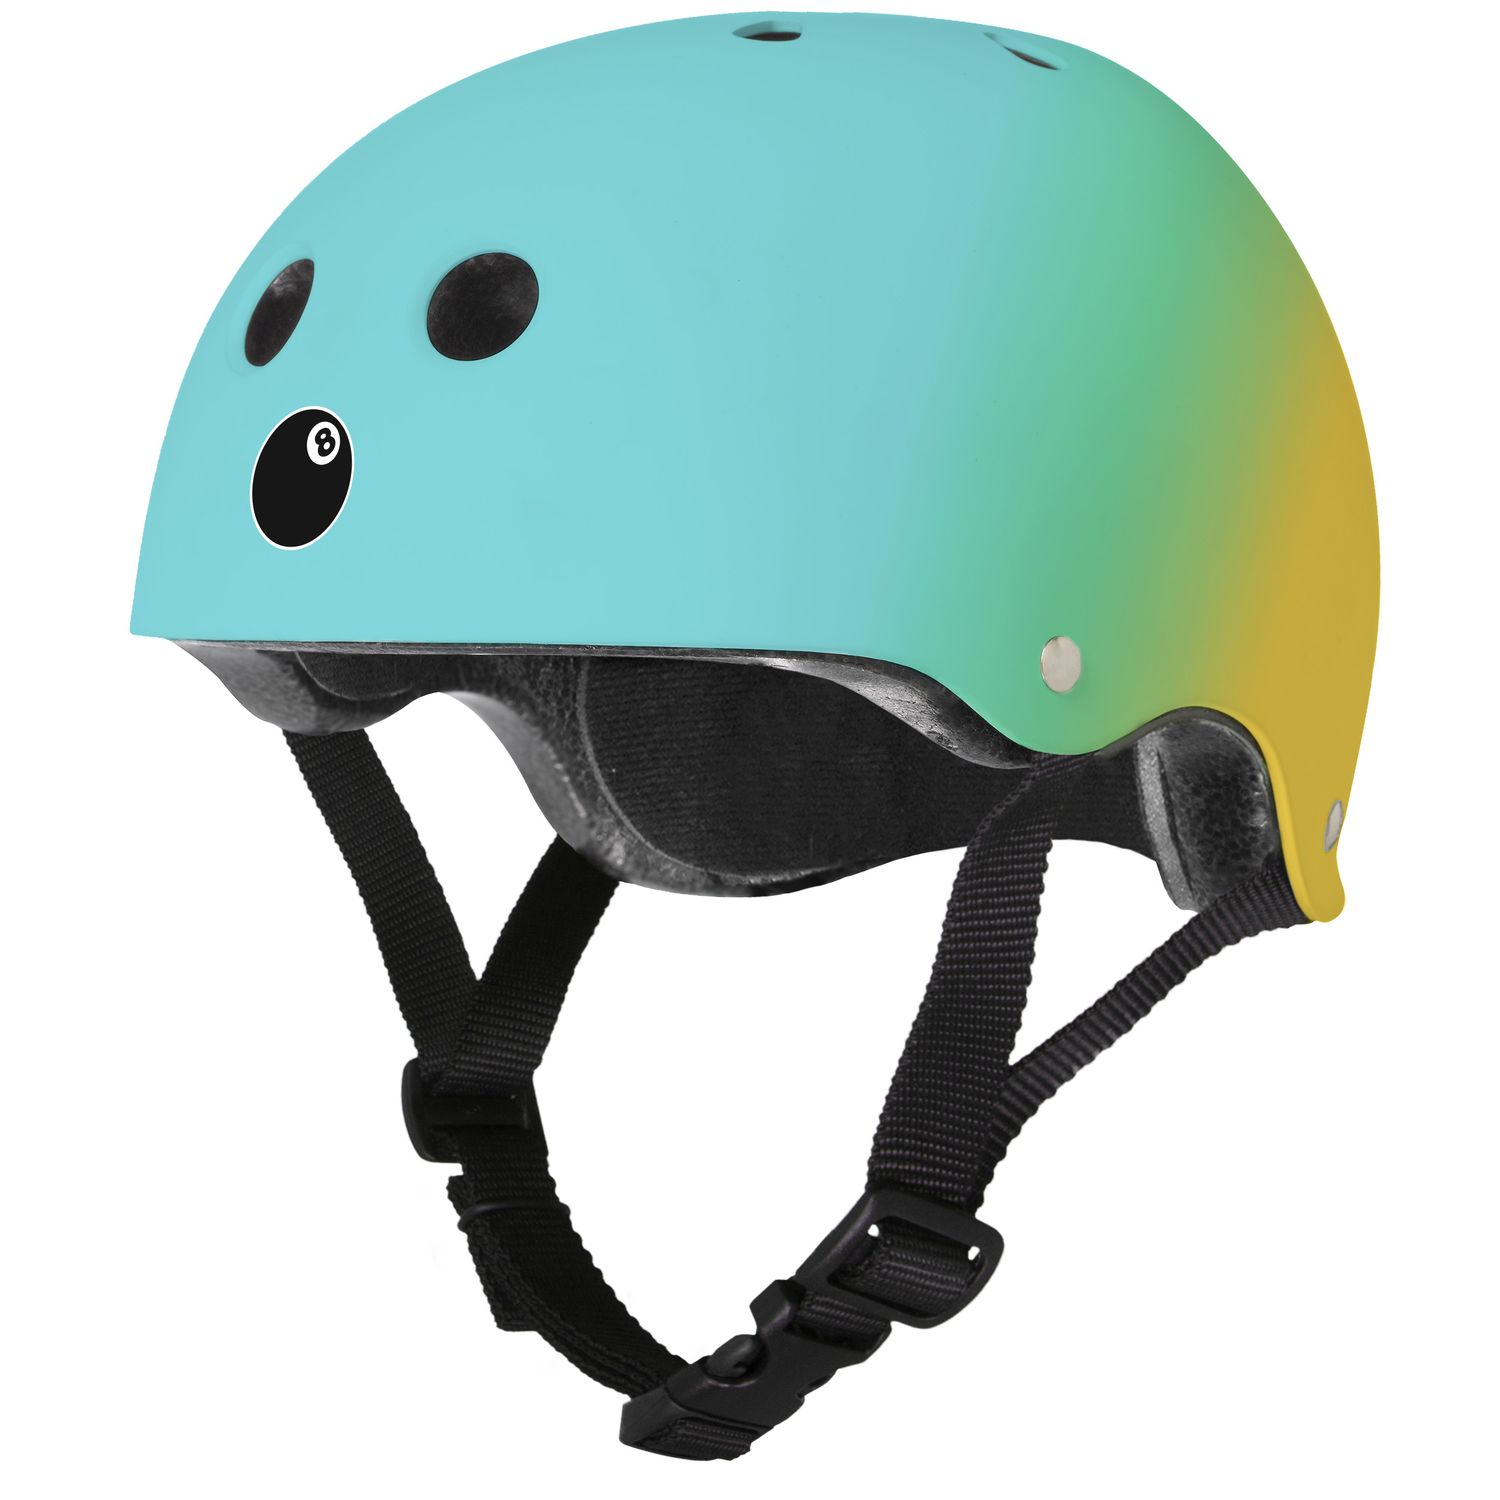 Шлем защитный Eight Ball Coral Reef (8+) - голубой, зелёный, жёлтый шлем защитный eight ball gun matte 8 серый